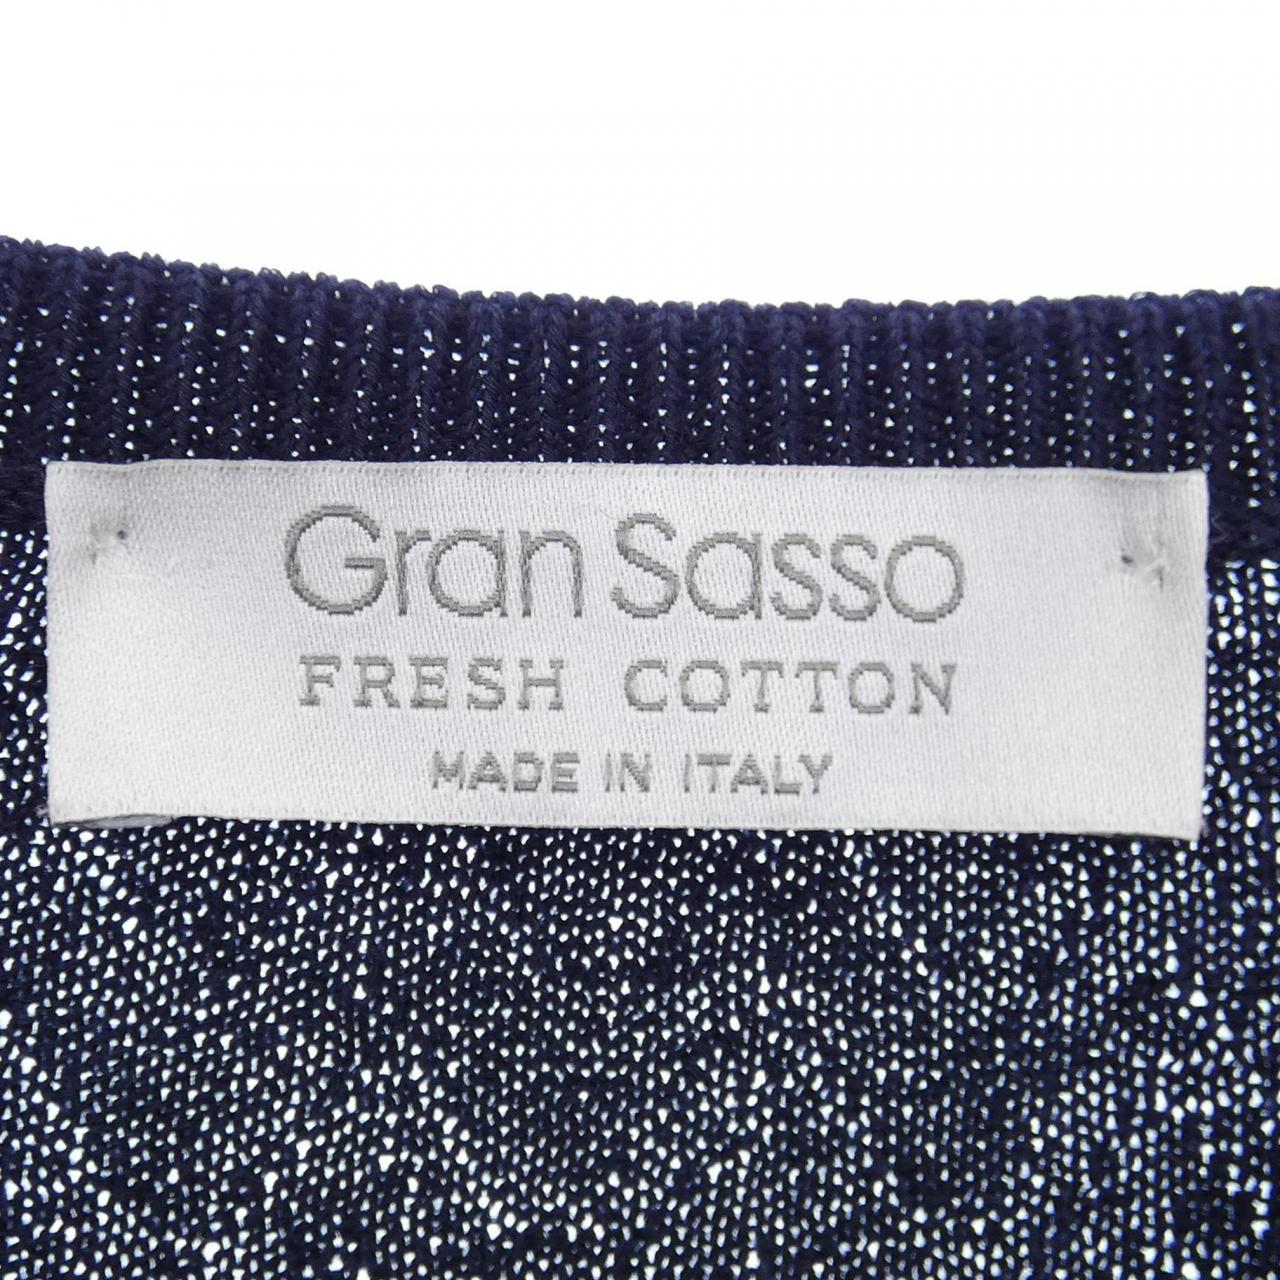 Gran Sasso Gran Sasso針織衫